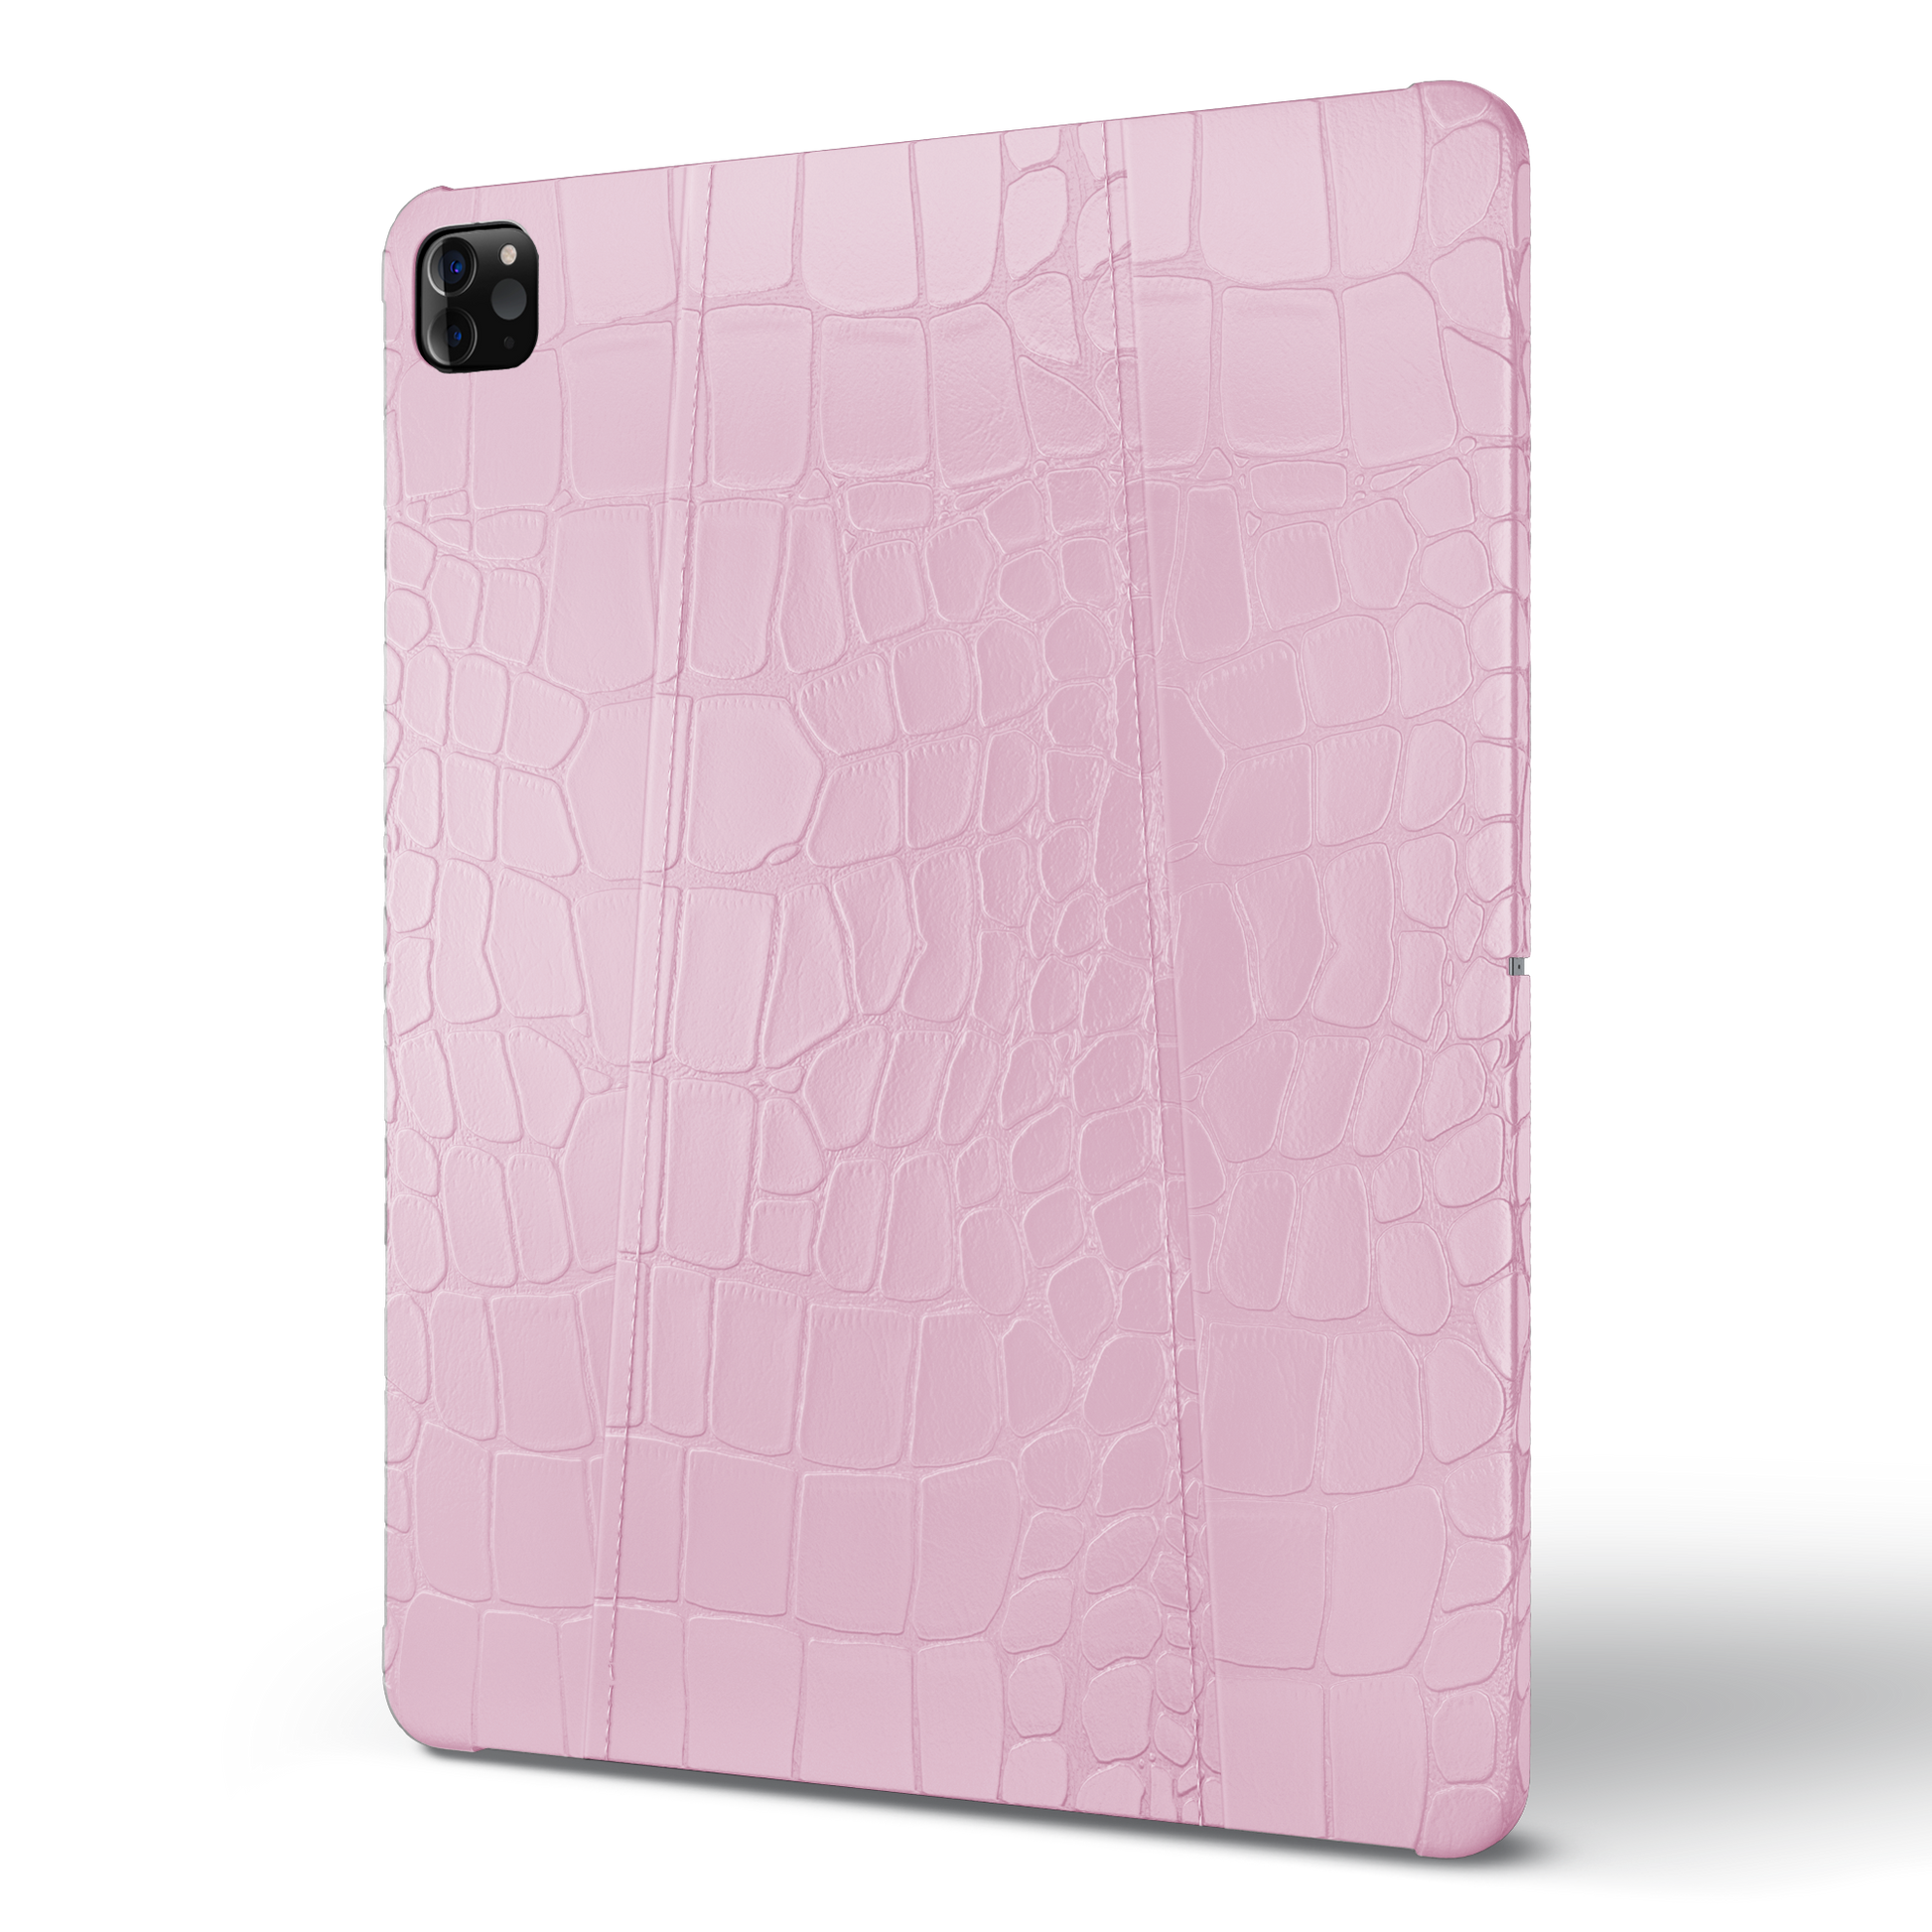 Ipad Pro (2nd-3rd-4th Gen) 11-inch Pink Alligator Case